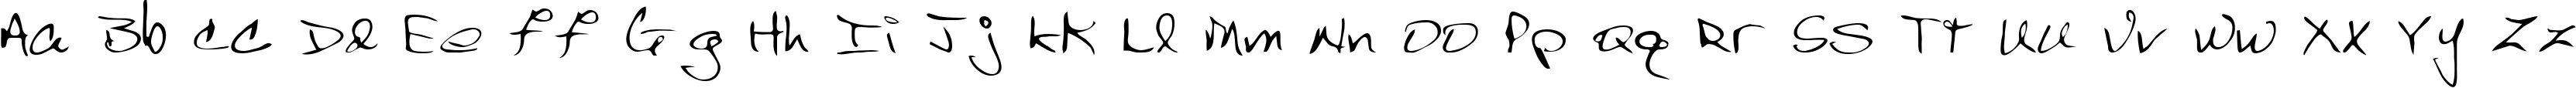 Пример написания английского алфавита шрифтом Scrawl